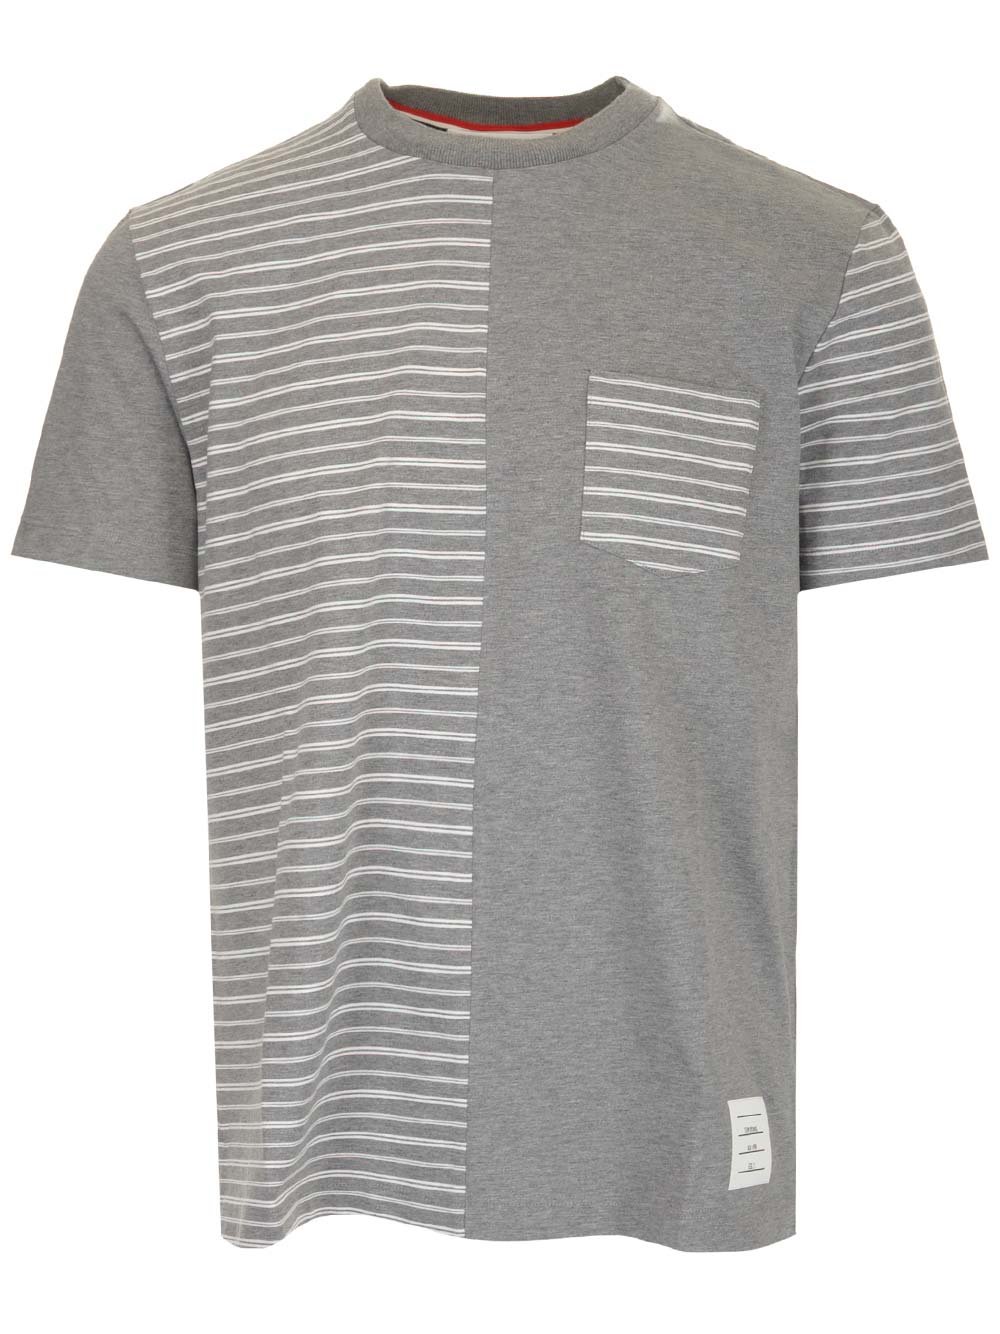 Thom Browne 男士灰色拼白色条纹棉质圆领短袖t恤 Mjs180f-08070-035 In Gray